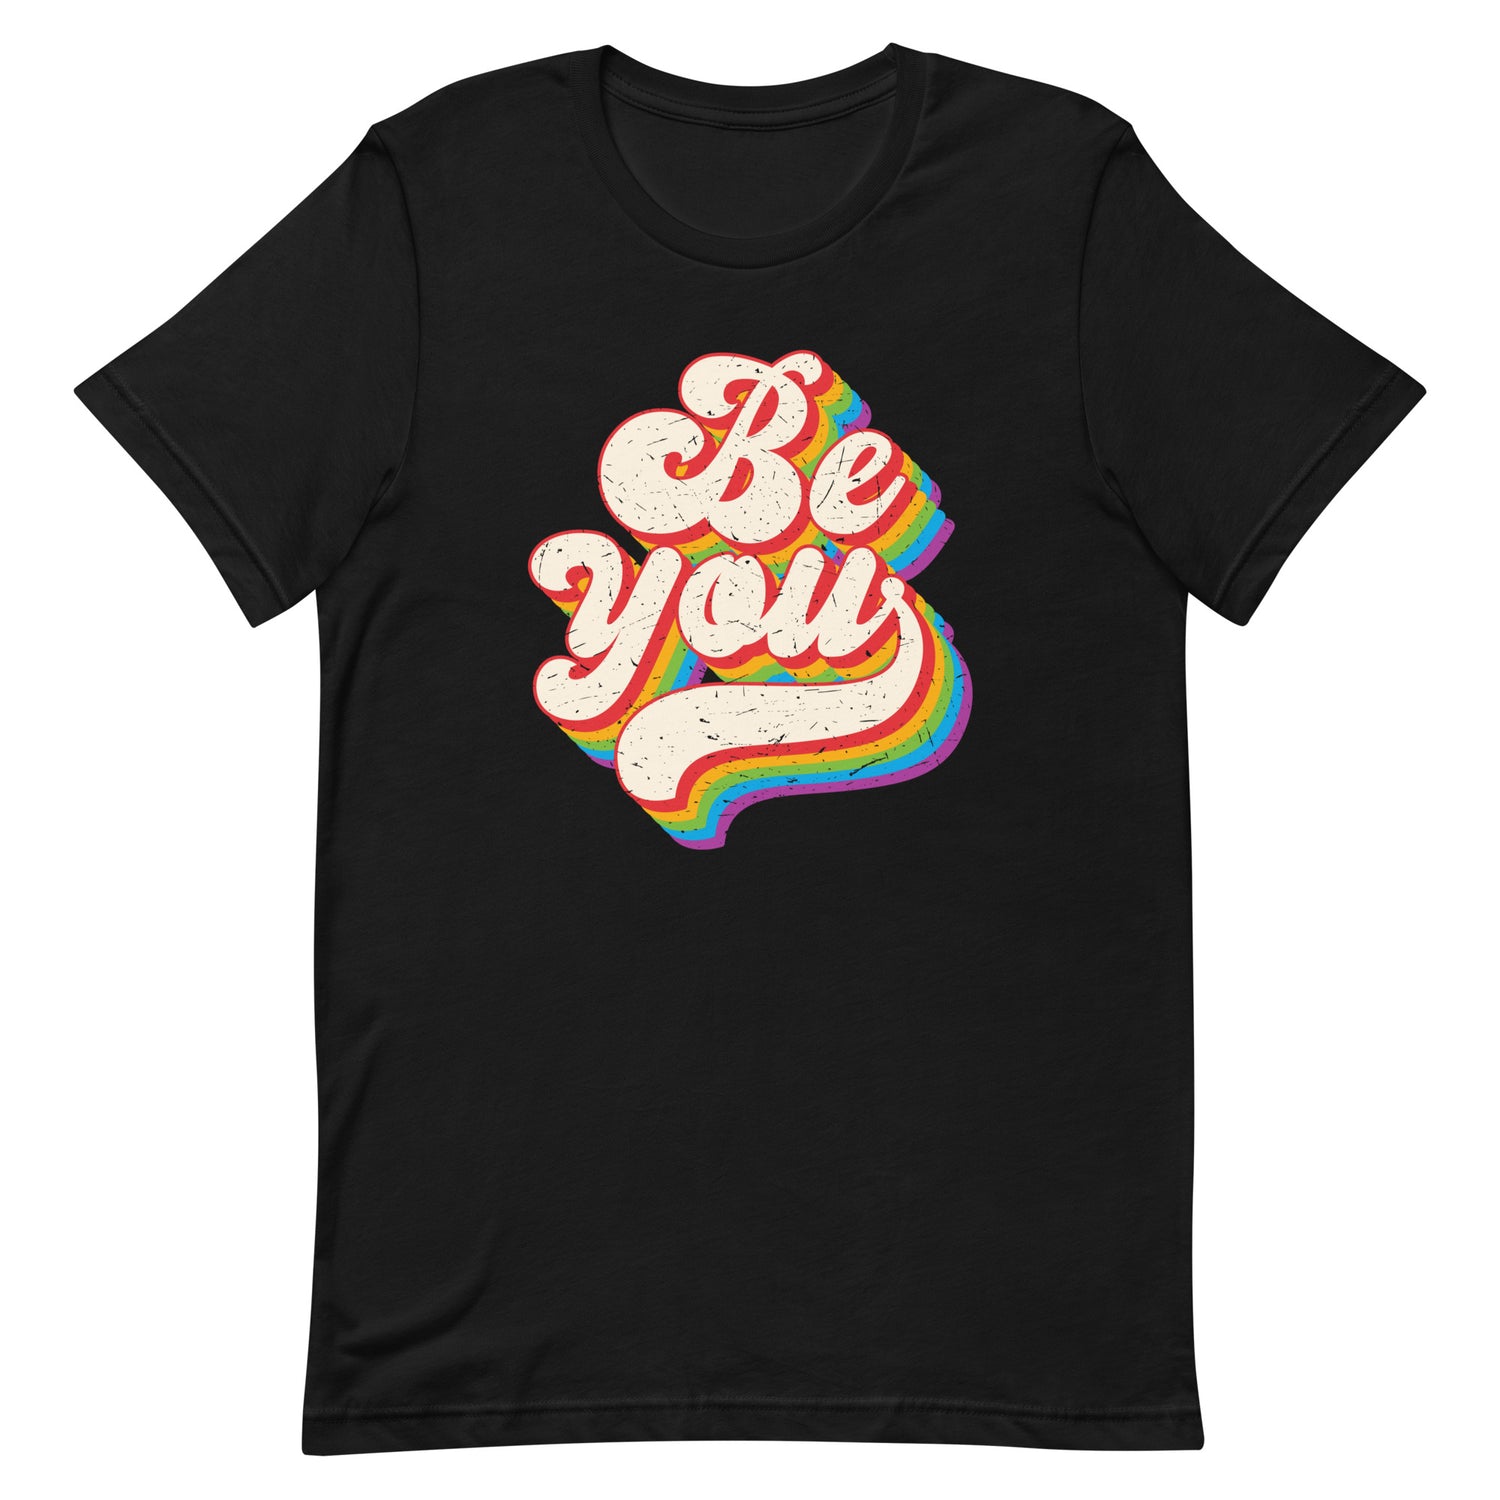 Be You LGBTQ Pride T-Shirt - gay pride apparel